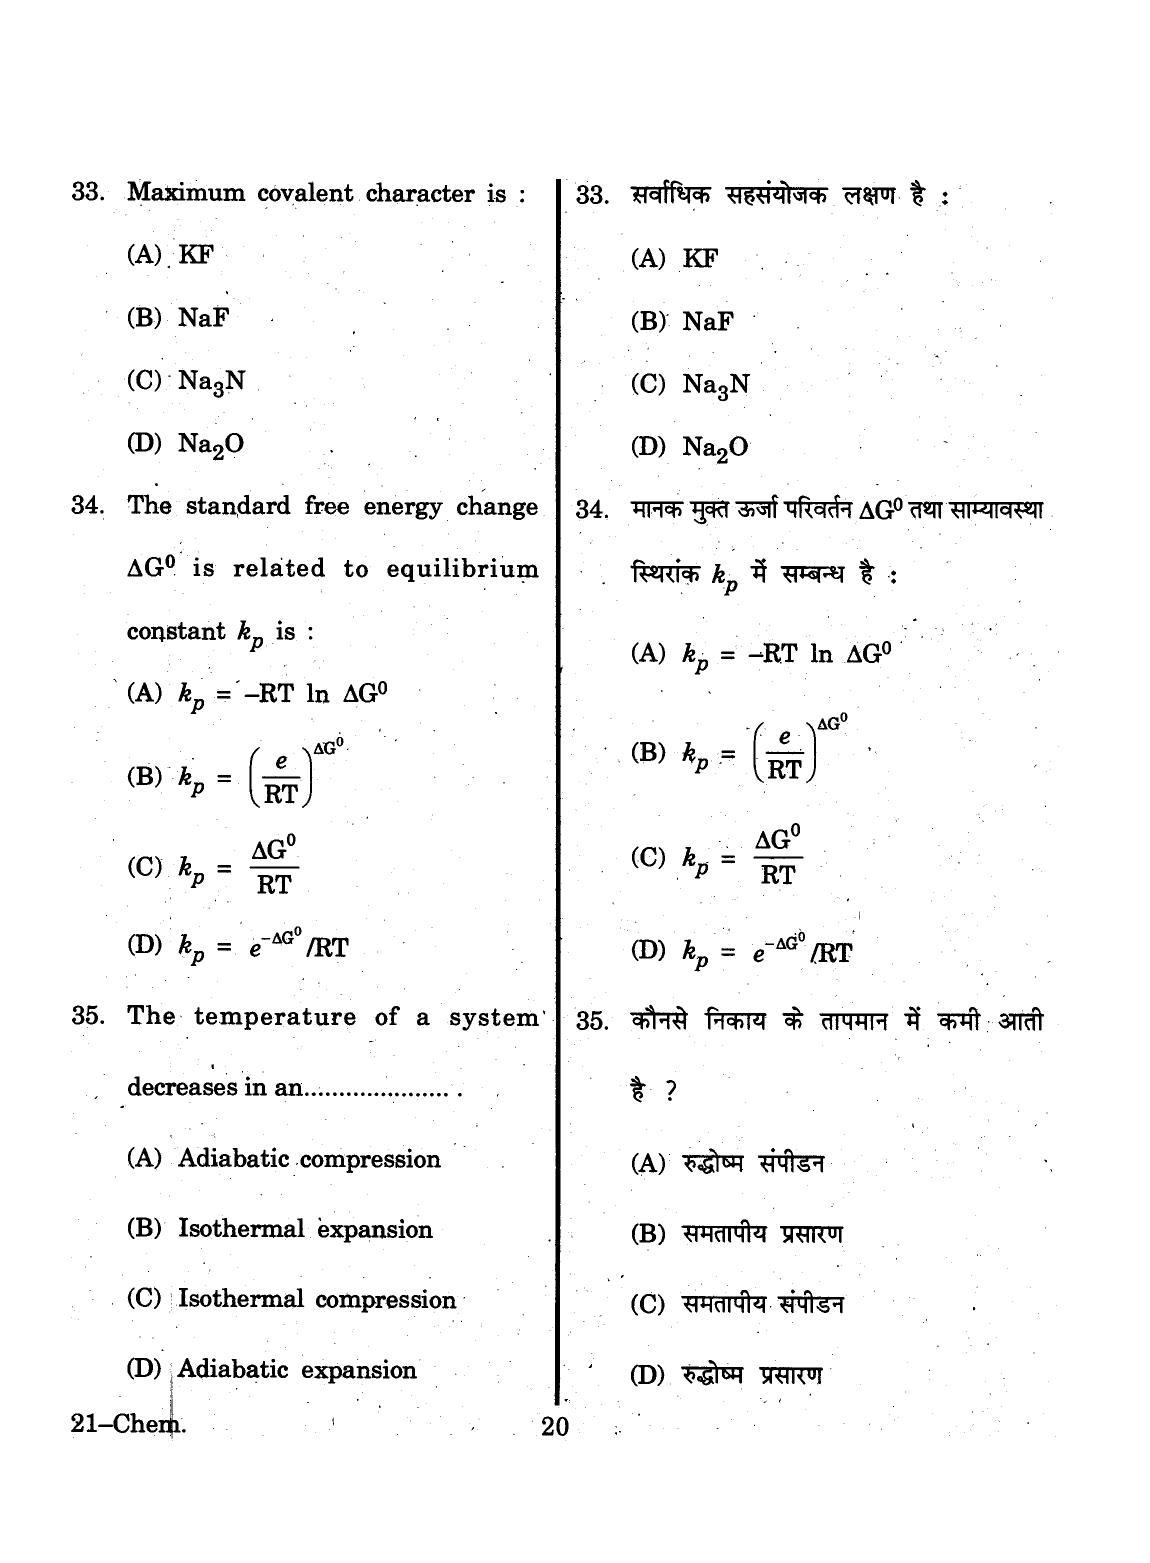 URATPG 2015 Chemisty Question Paper - Page 20